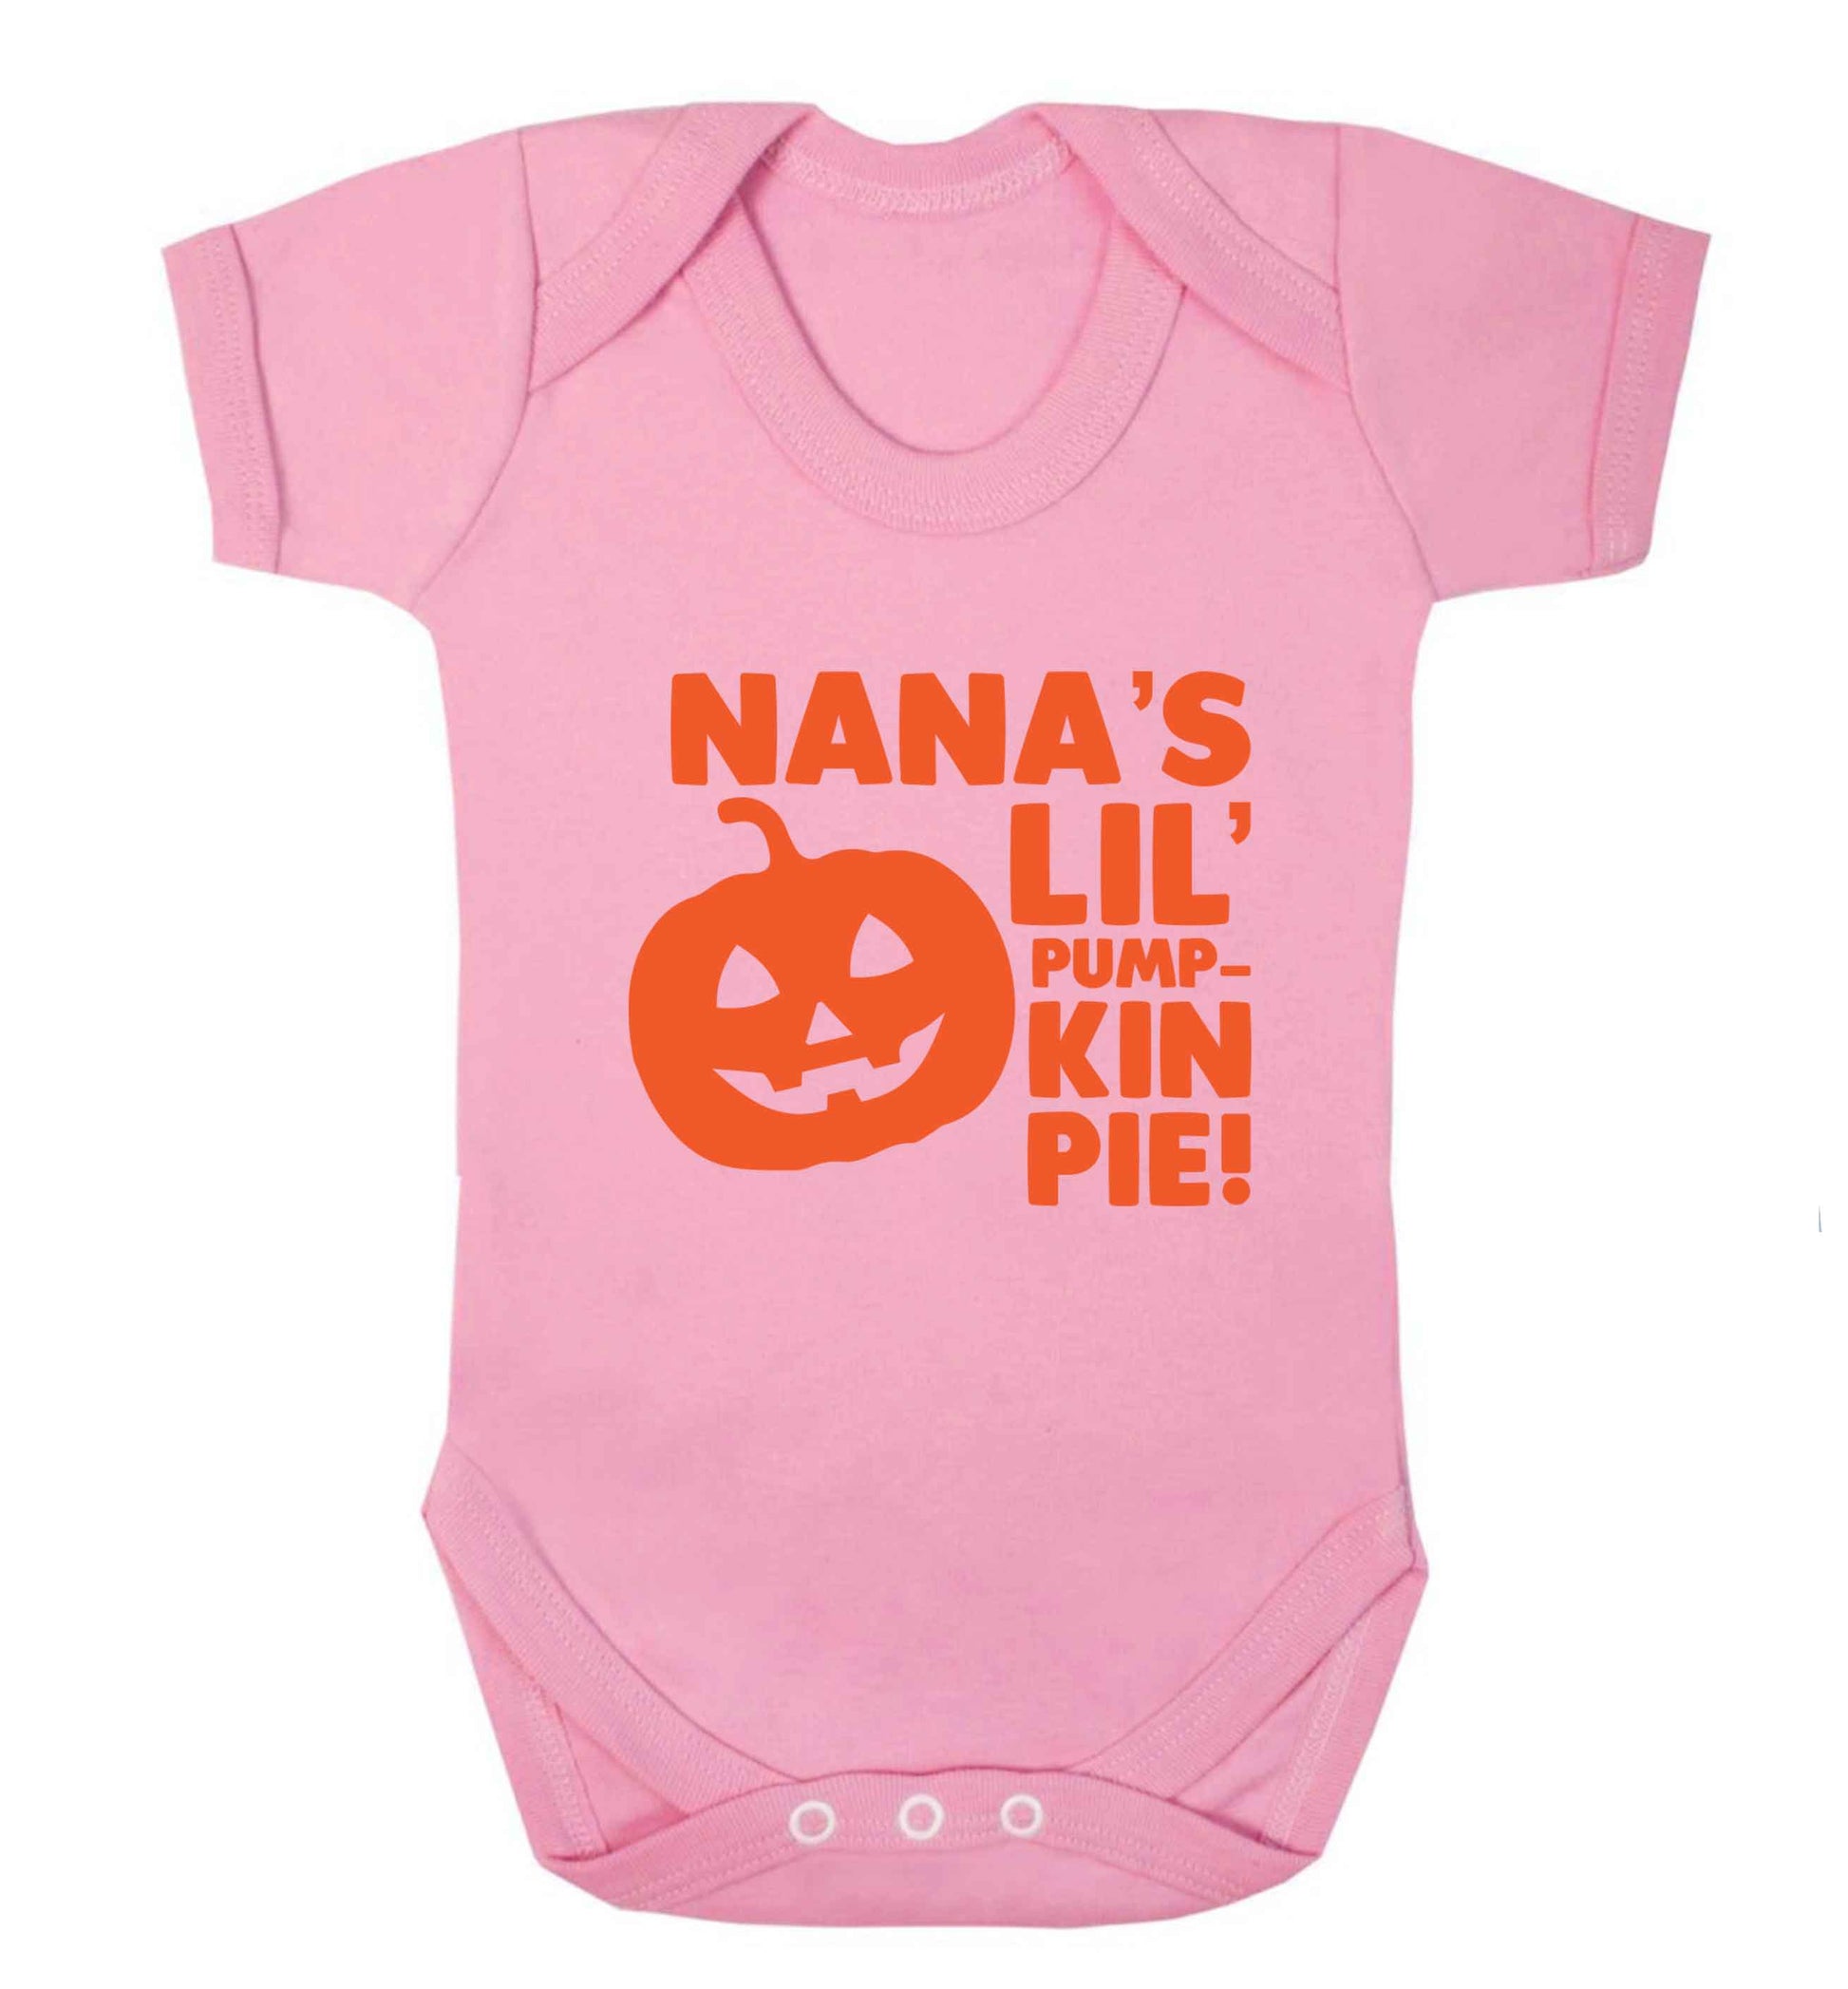 Nana's lil' pumpkin pie baby vest pale pink 18-24 months